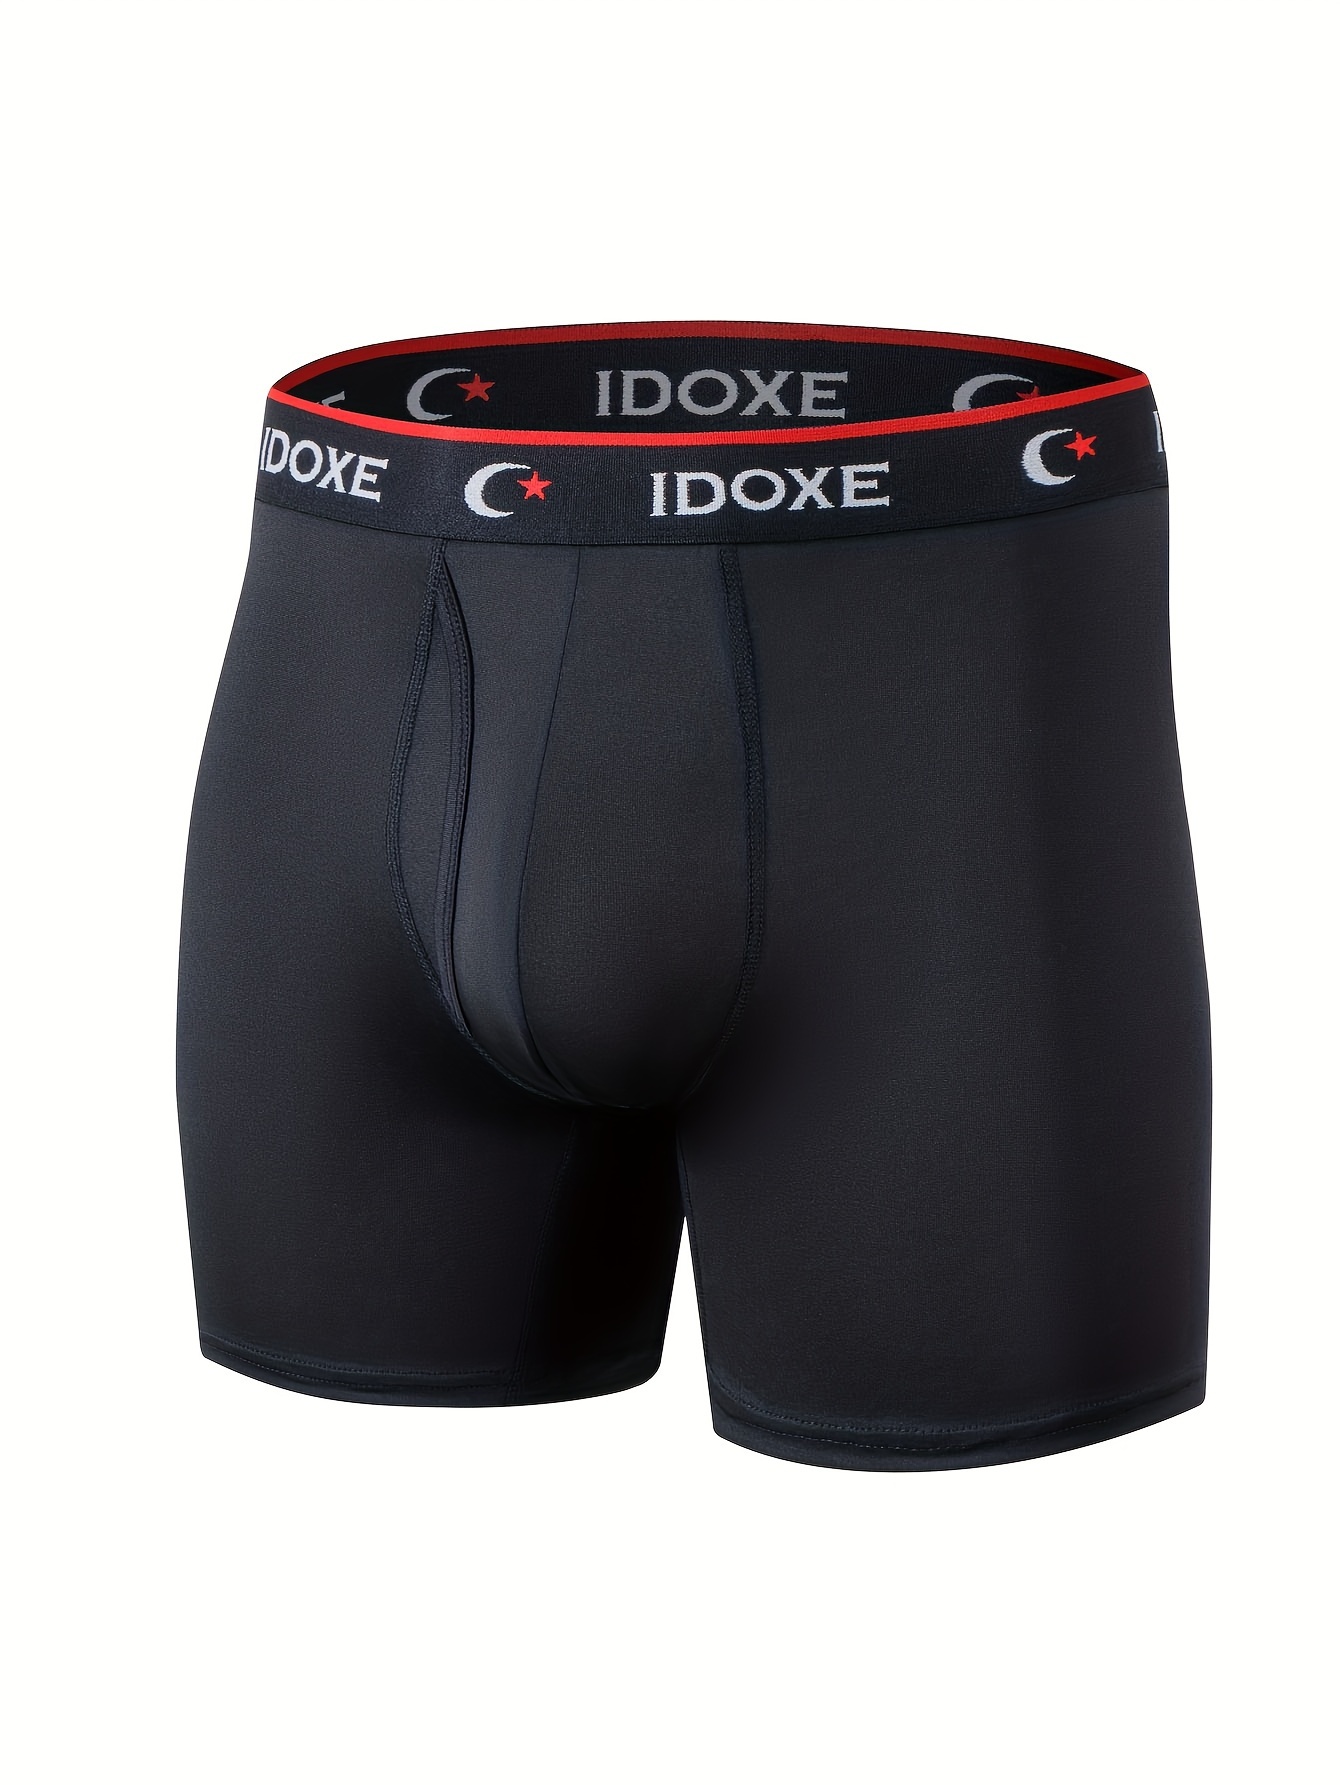 Plus Size Large Loose Male Cotton Underwear Boxers - China Soft